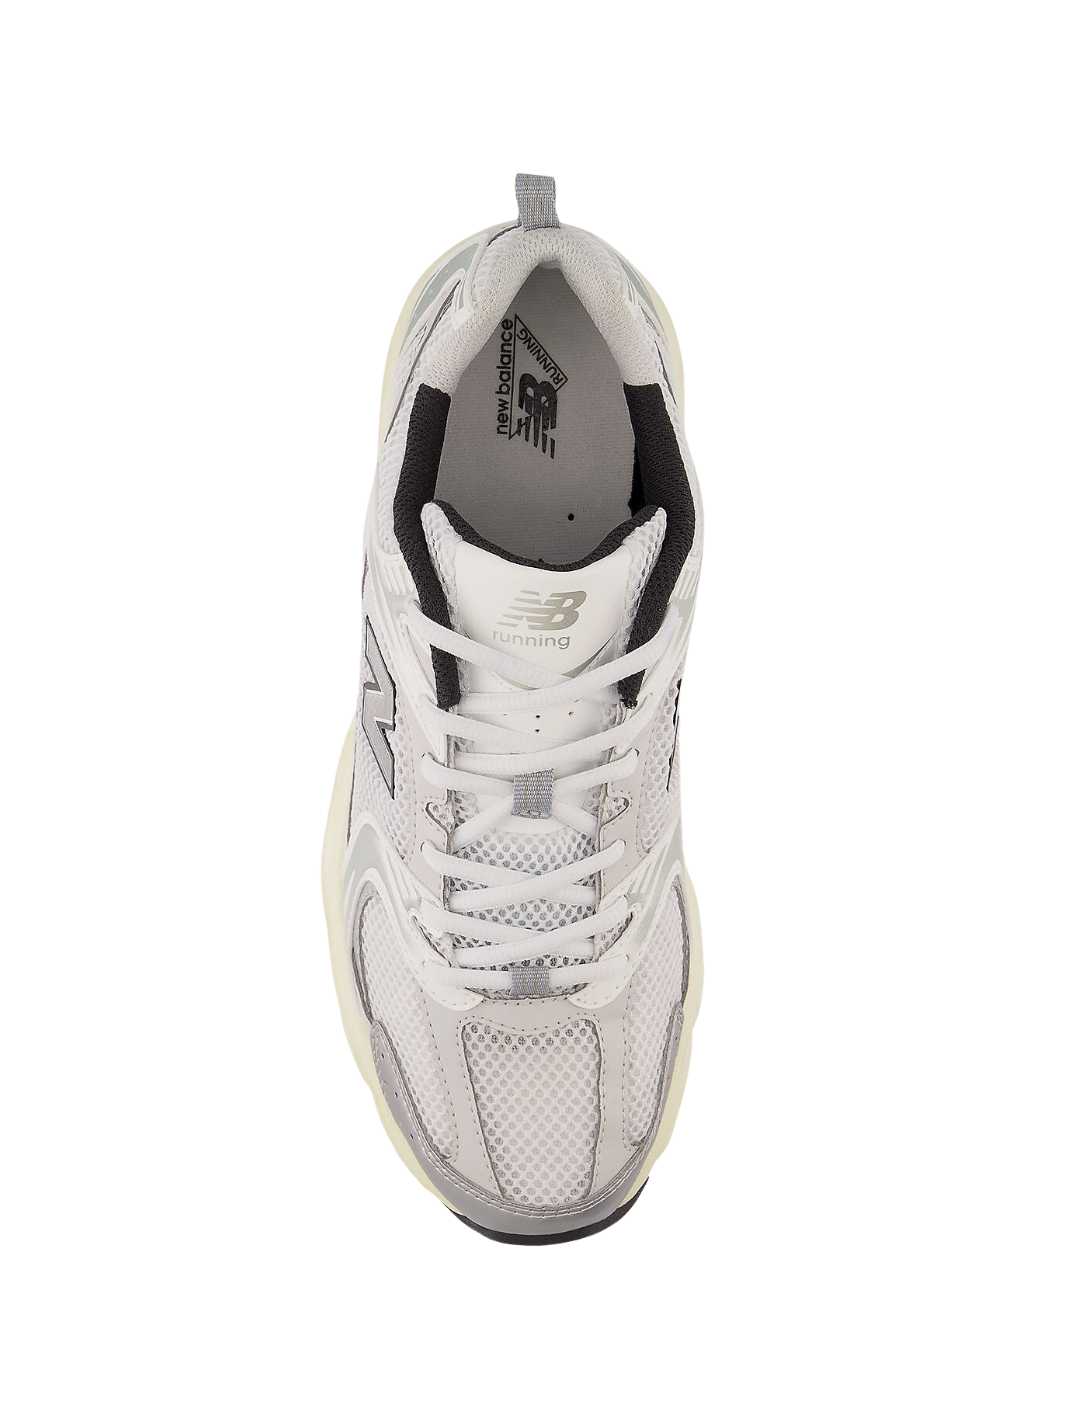 New Balance Shoes Sneakers | MR530TA White/Silver Metallic